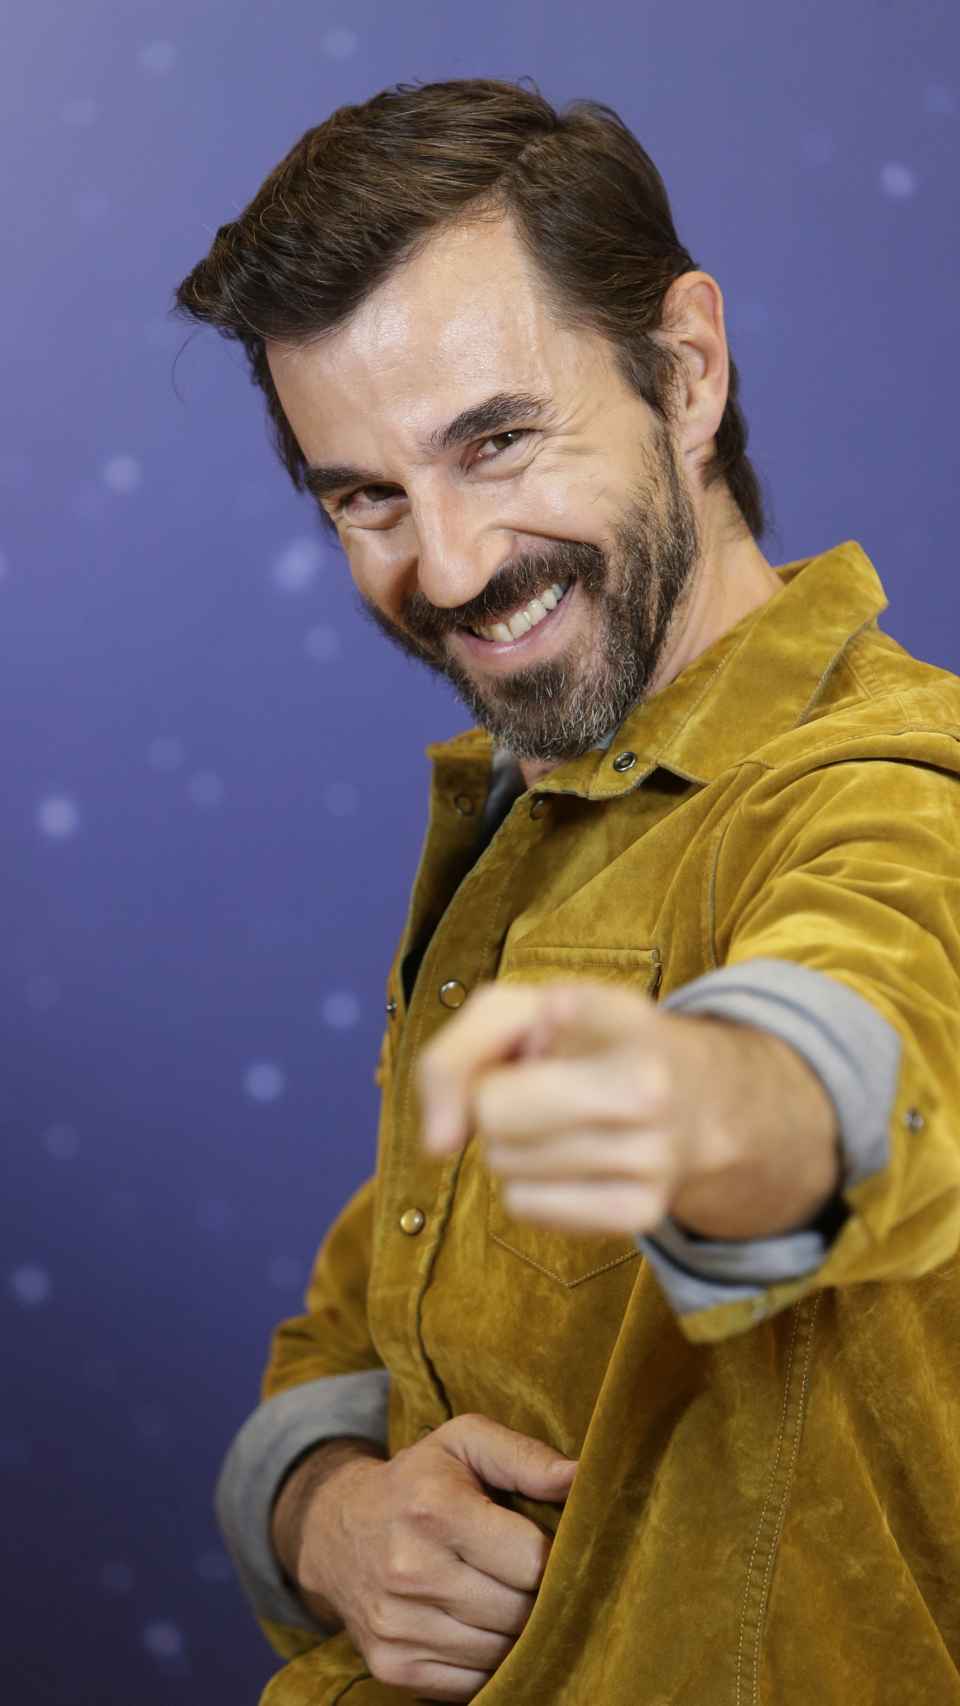 El presentador Santi Millán en una imagen promocional de 'Got Talent', en 2015.